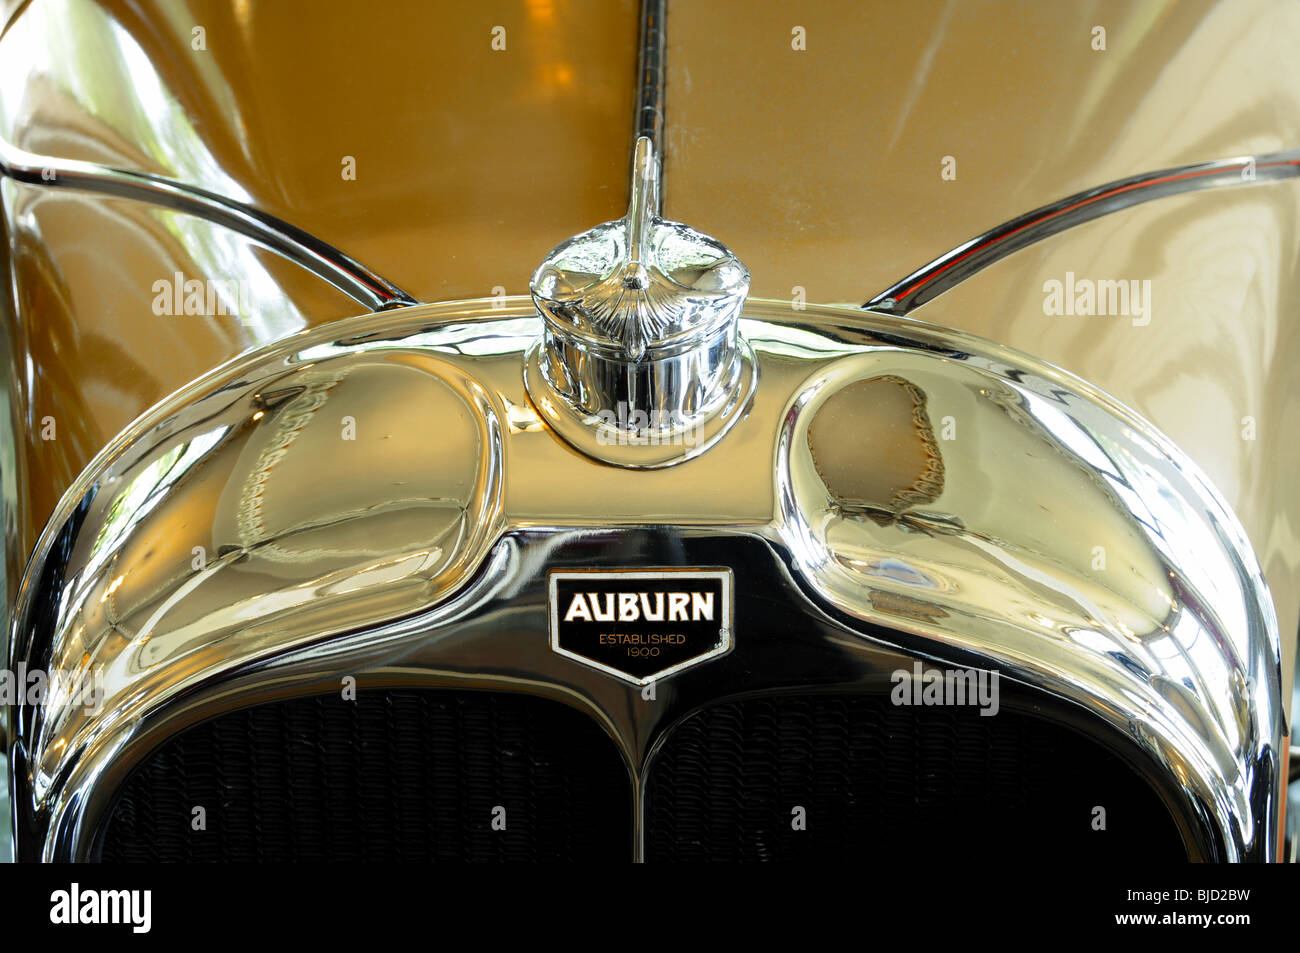 Auburn Automobile Stock Photo